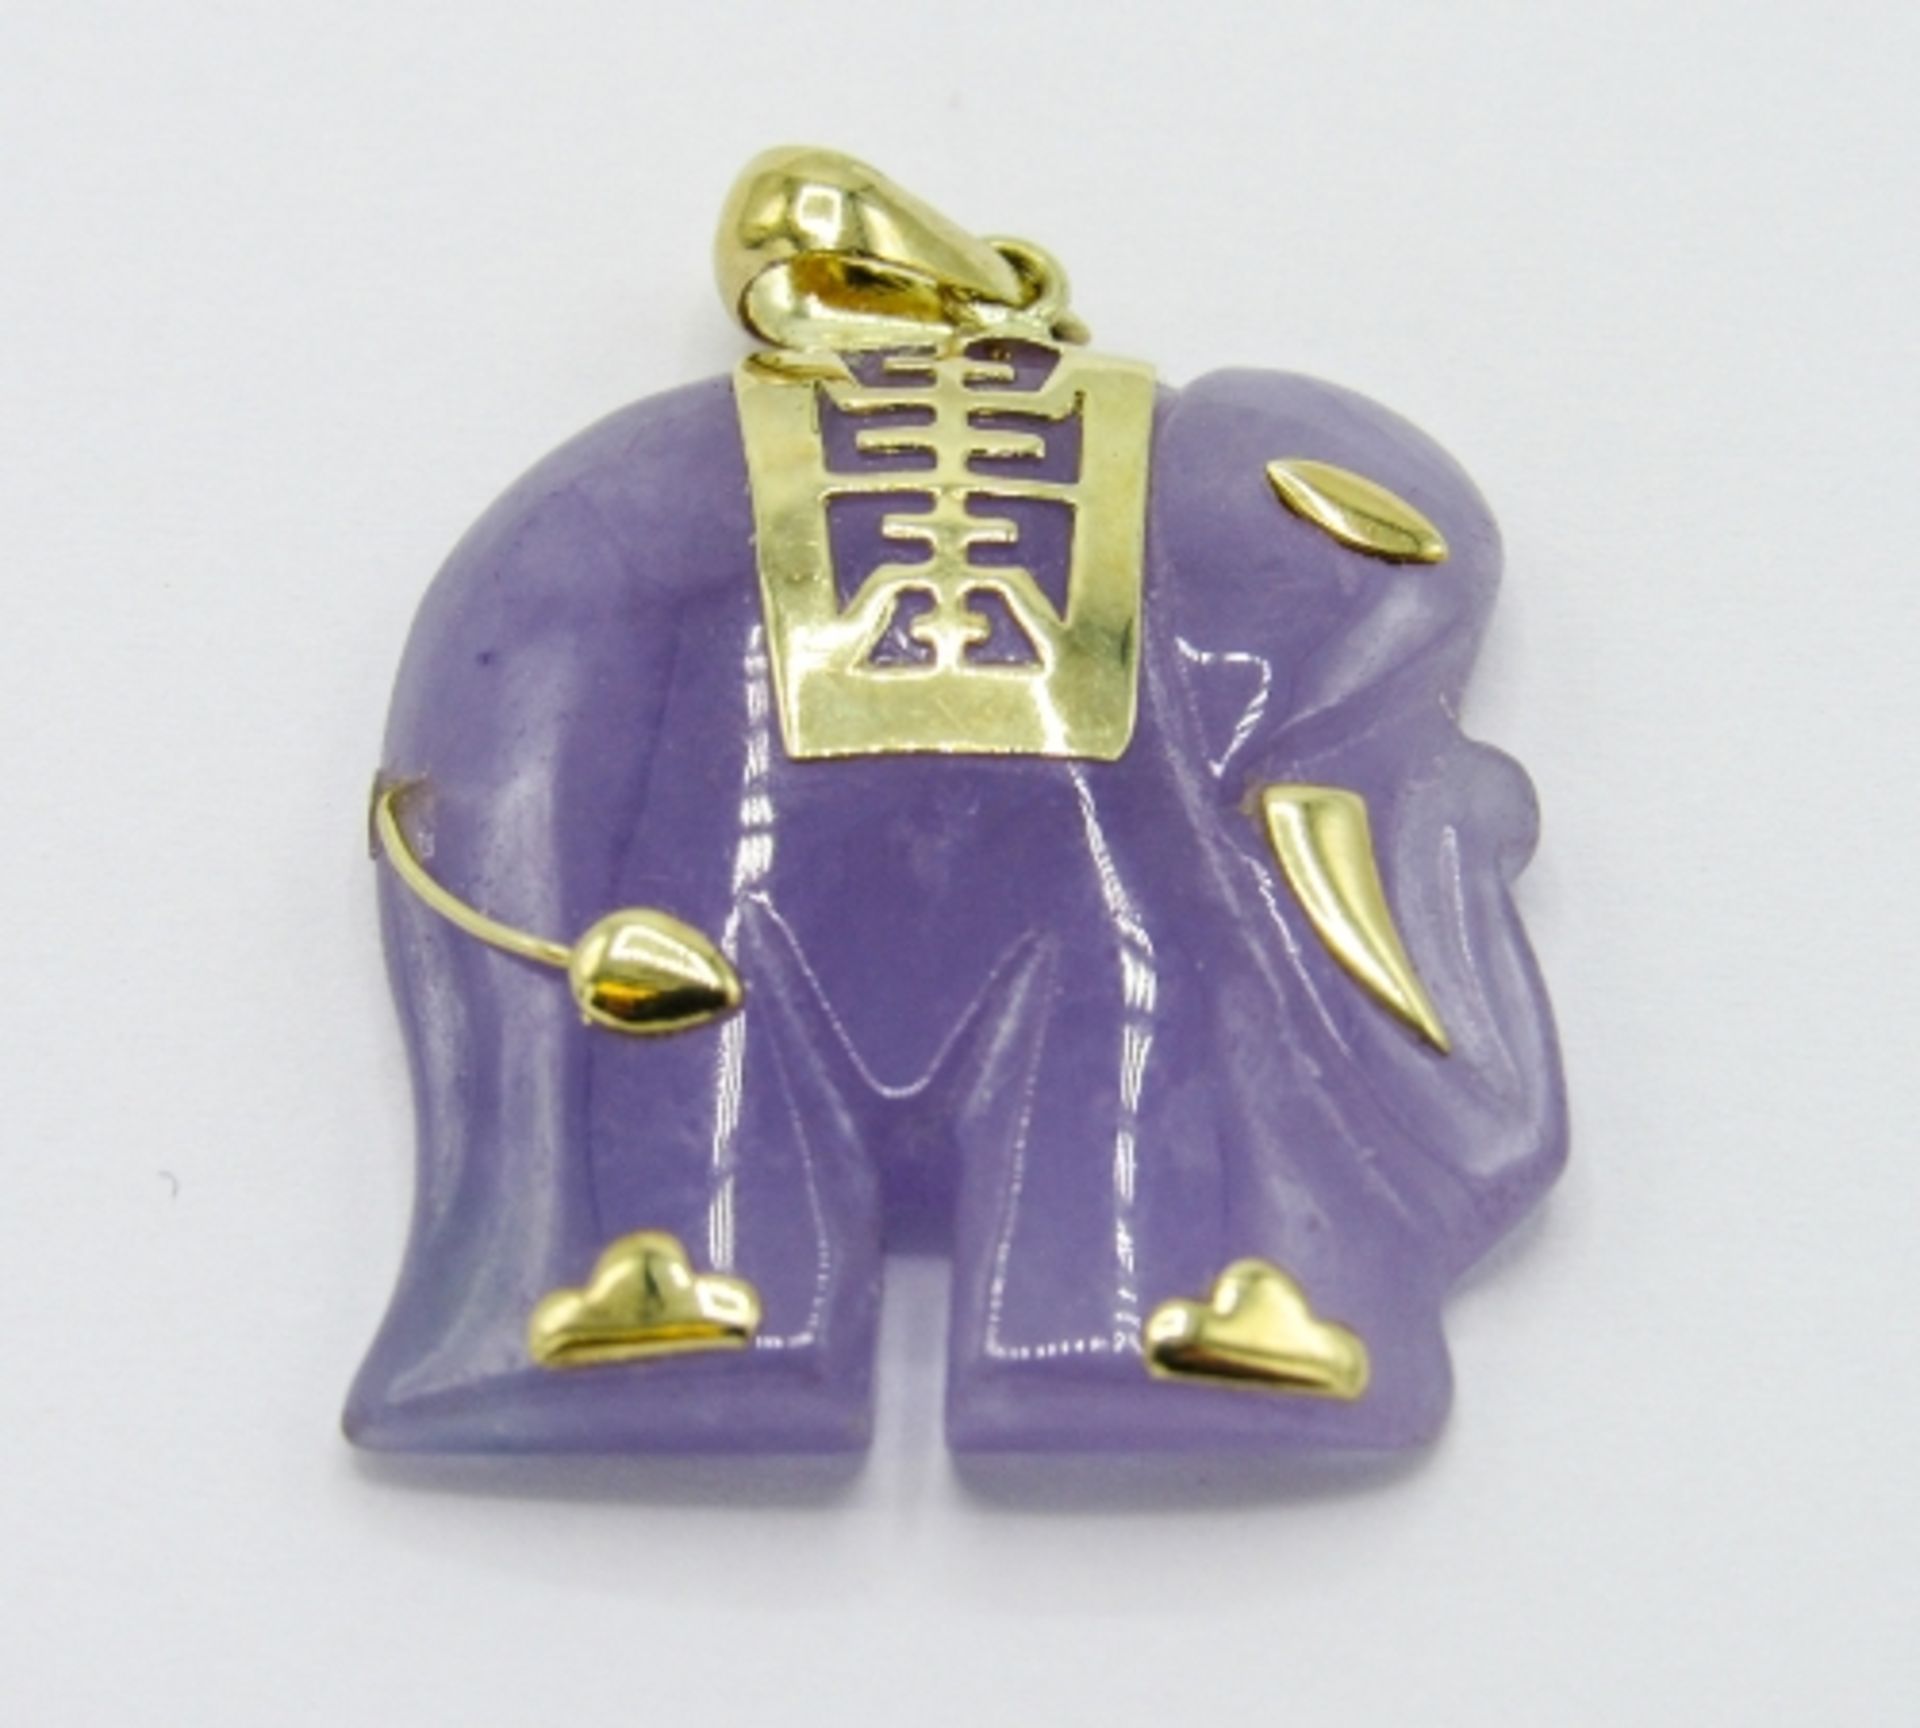 14ct gold mounted lavender jade elephant pendant & matching bracelet. Estimate £15-20 - Image 3 of 3